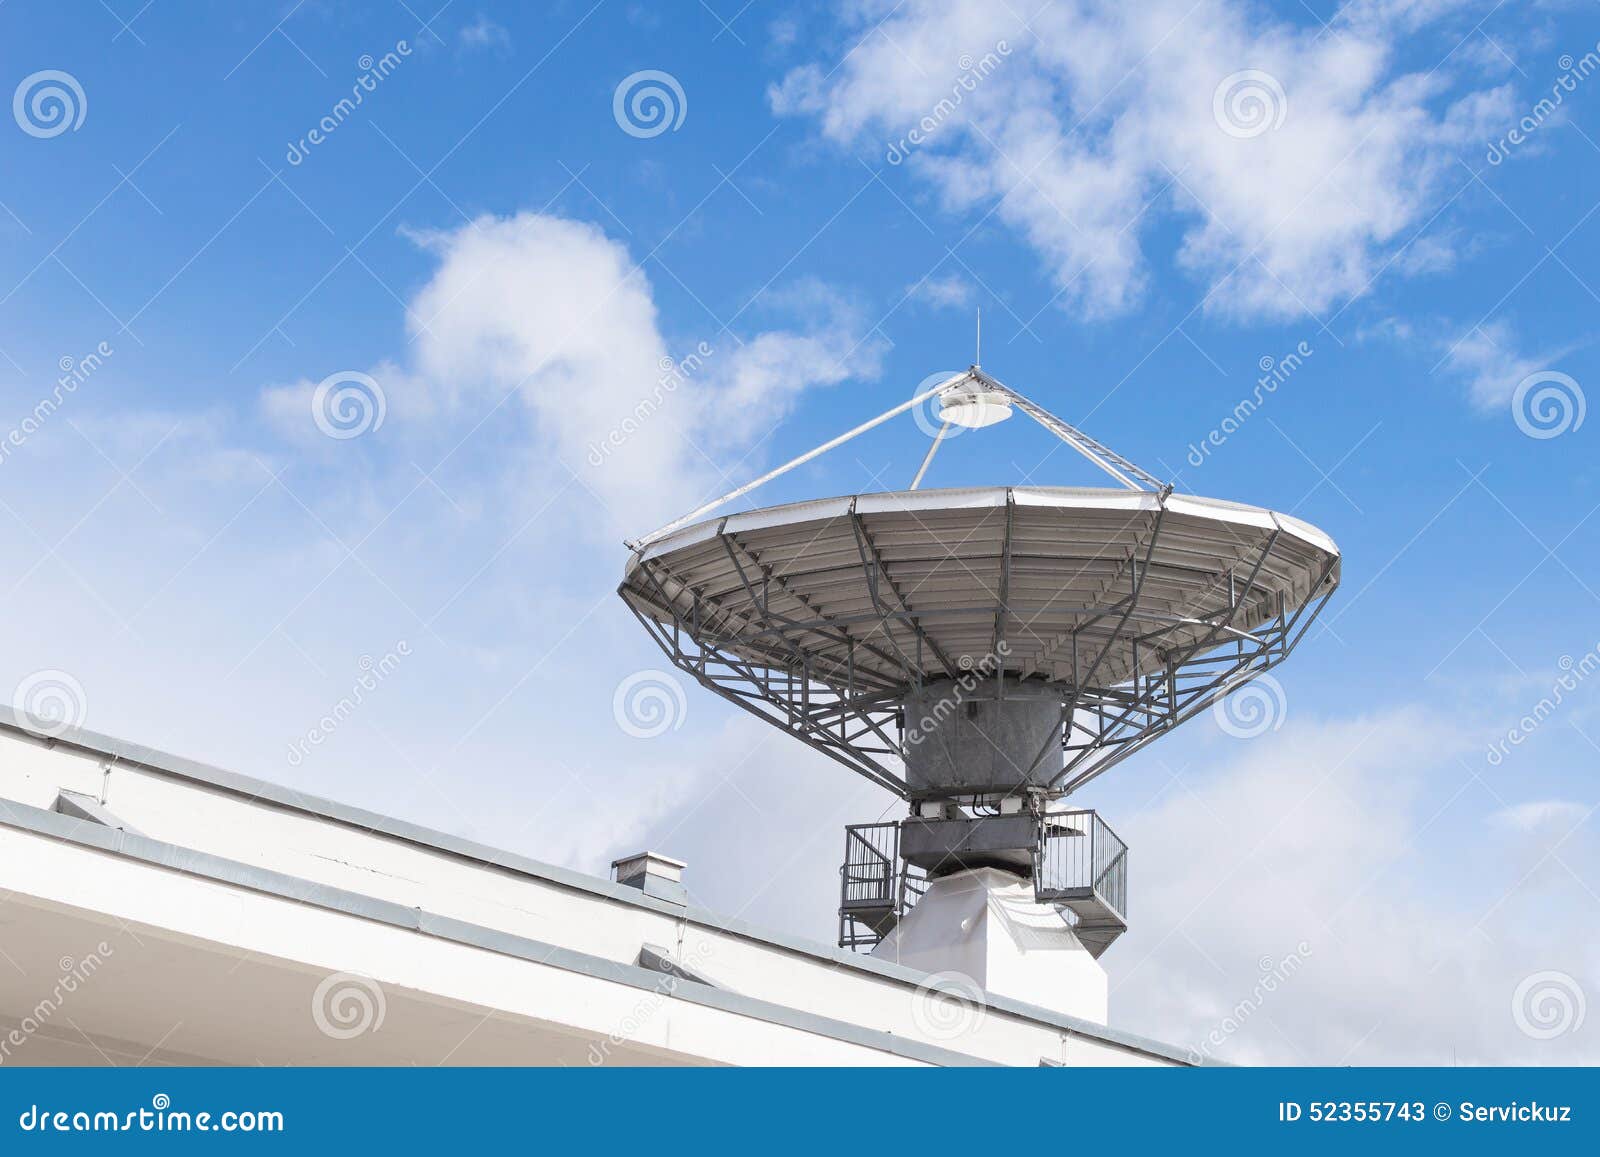 military radiolocator station with parabolic radar antenna dish